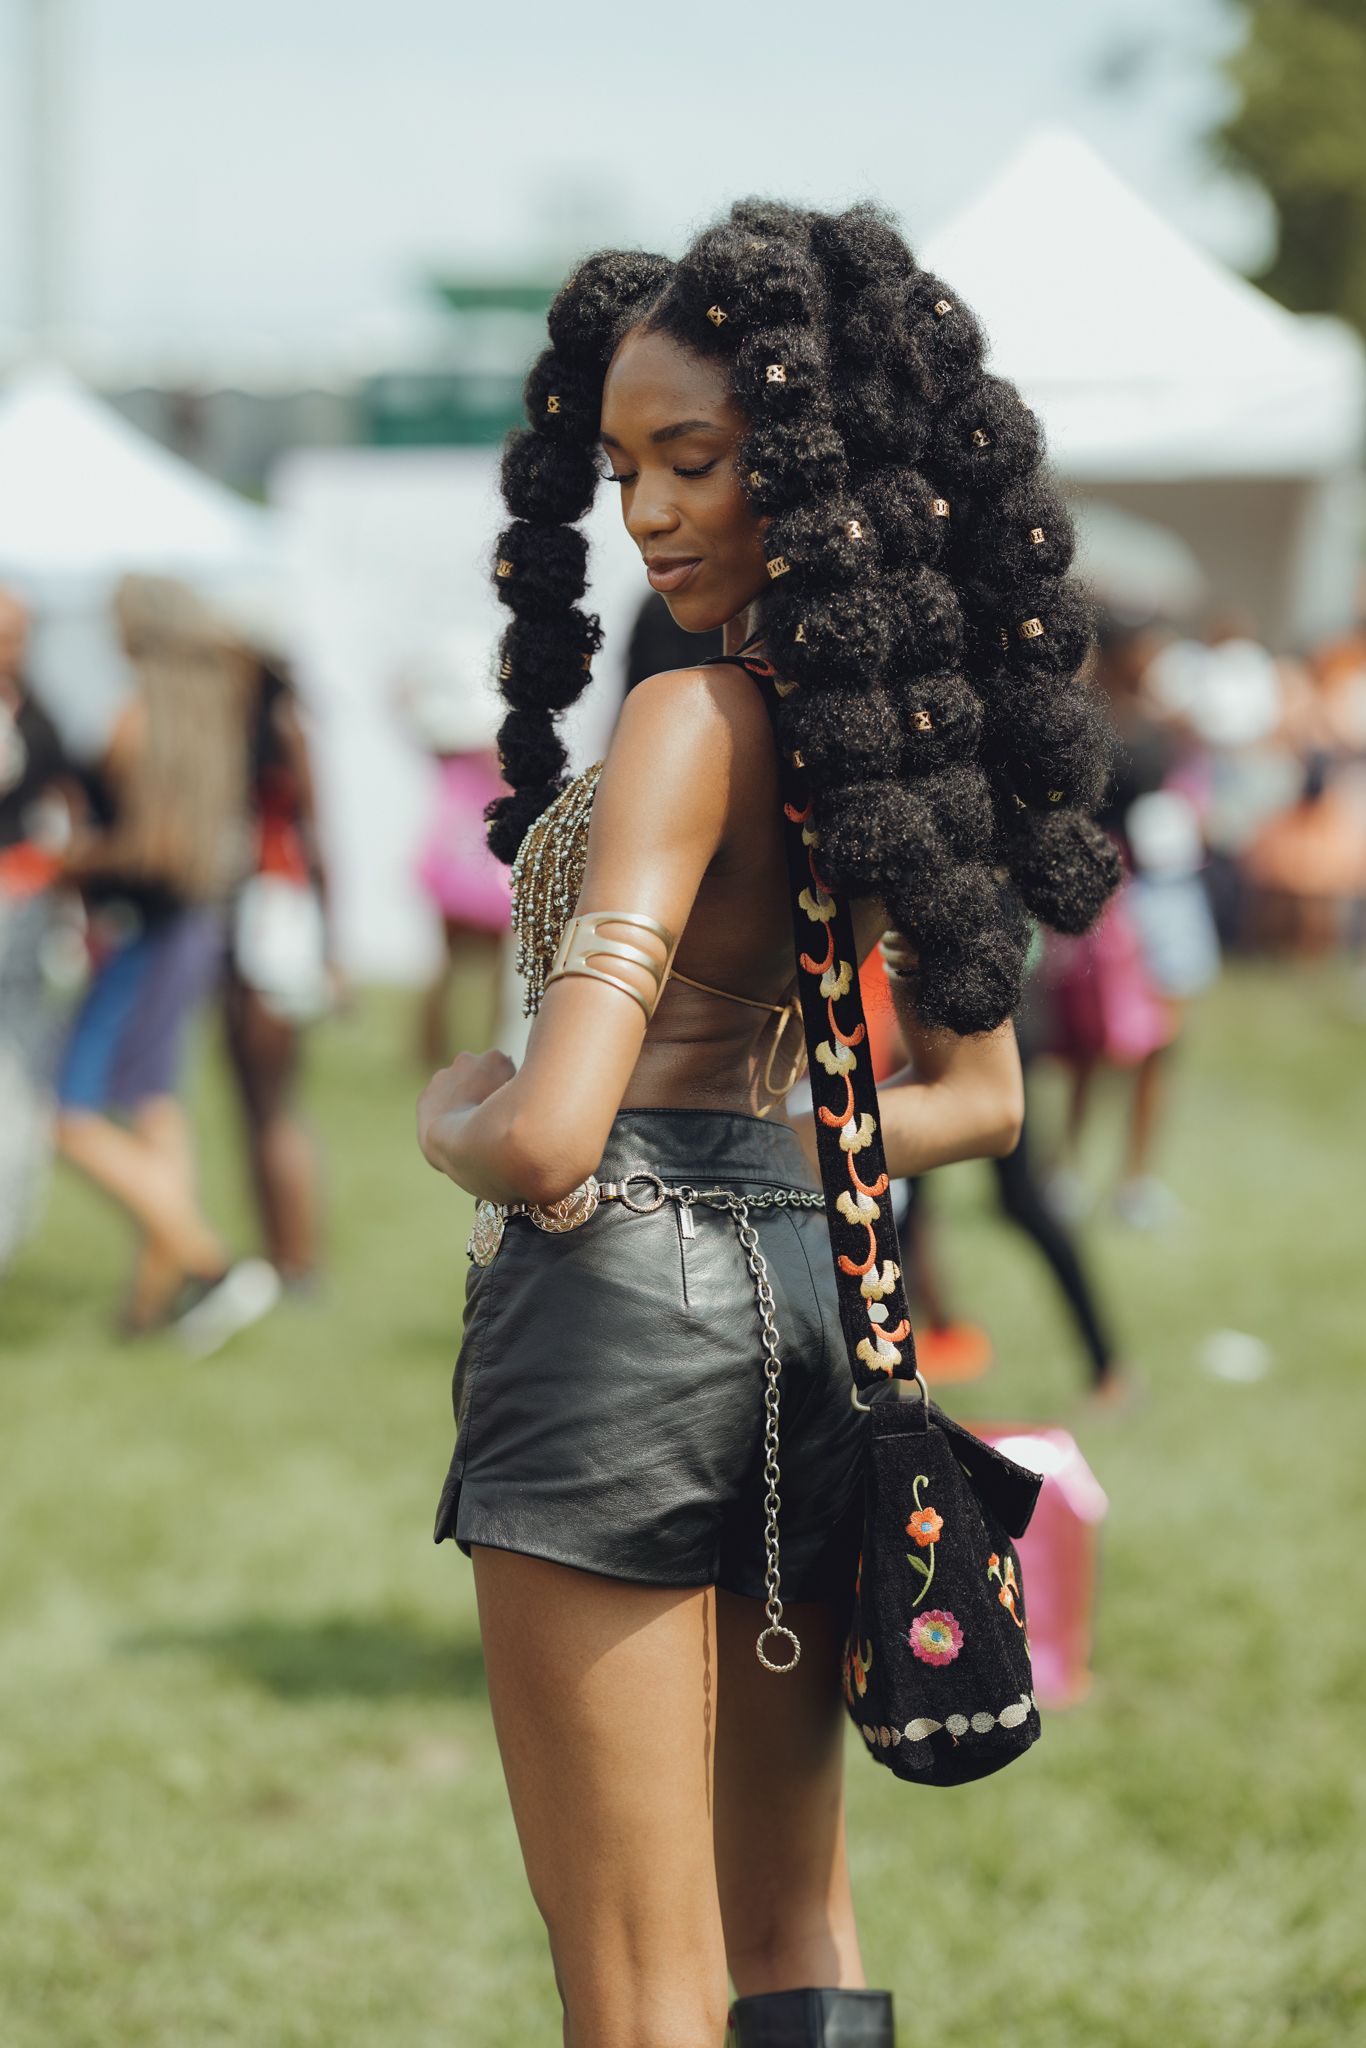 20 Best Festival Hairstyles 2020 - Coachella Hair Ideas, Trends and  Tutorials